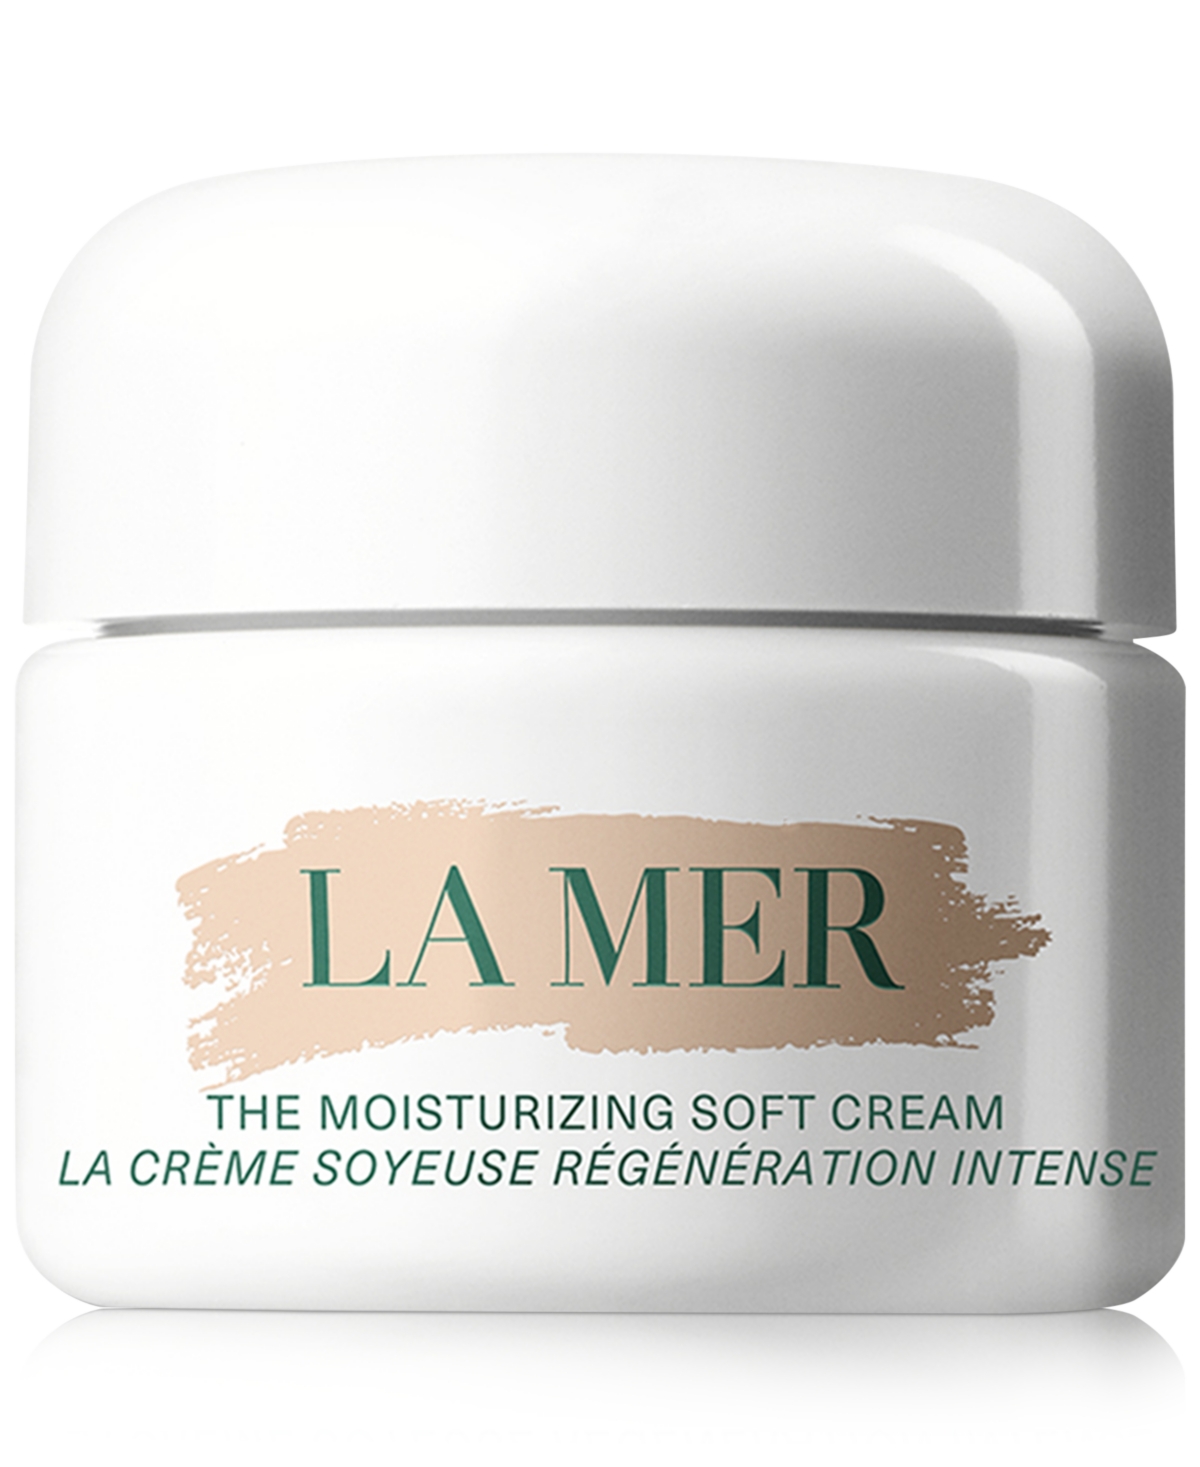 La Mer The Moisturizing Soft Cream, 1 Oz.